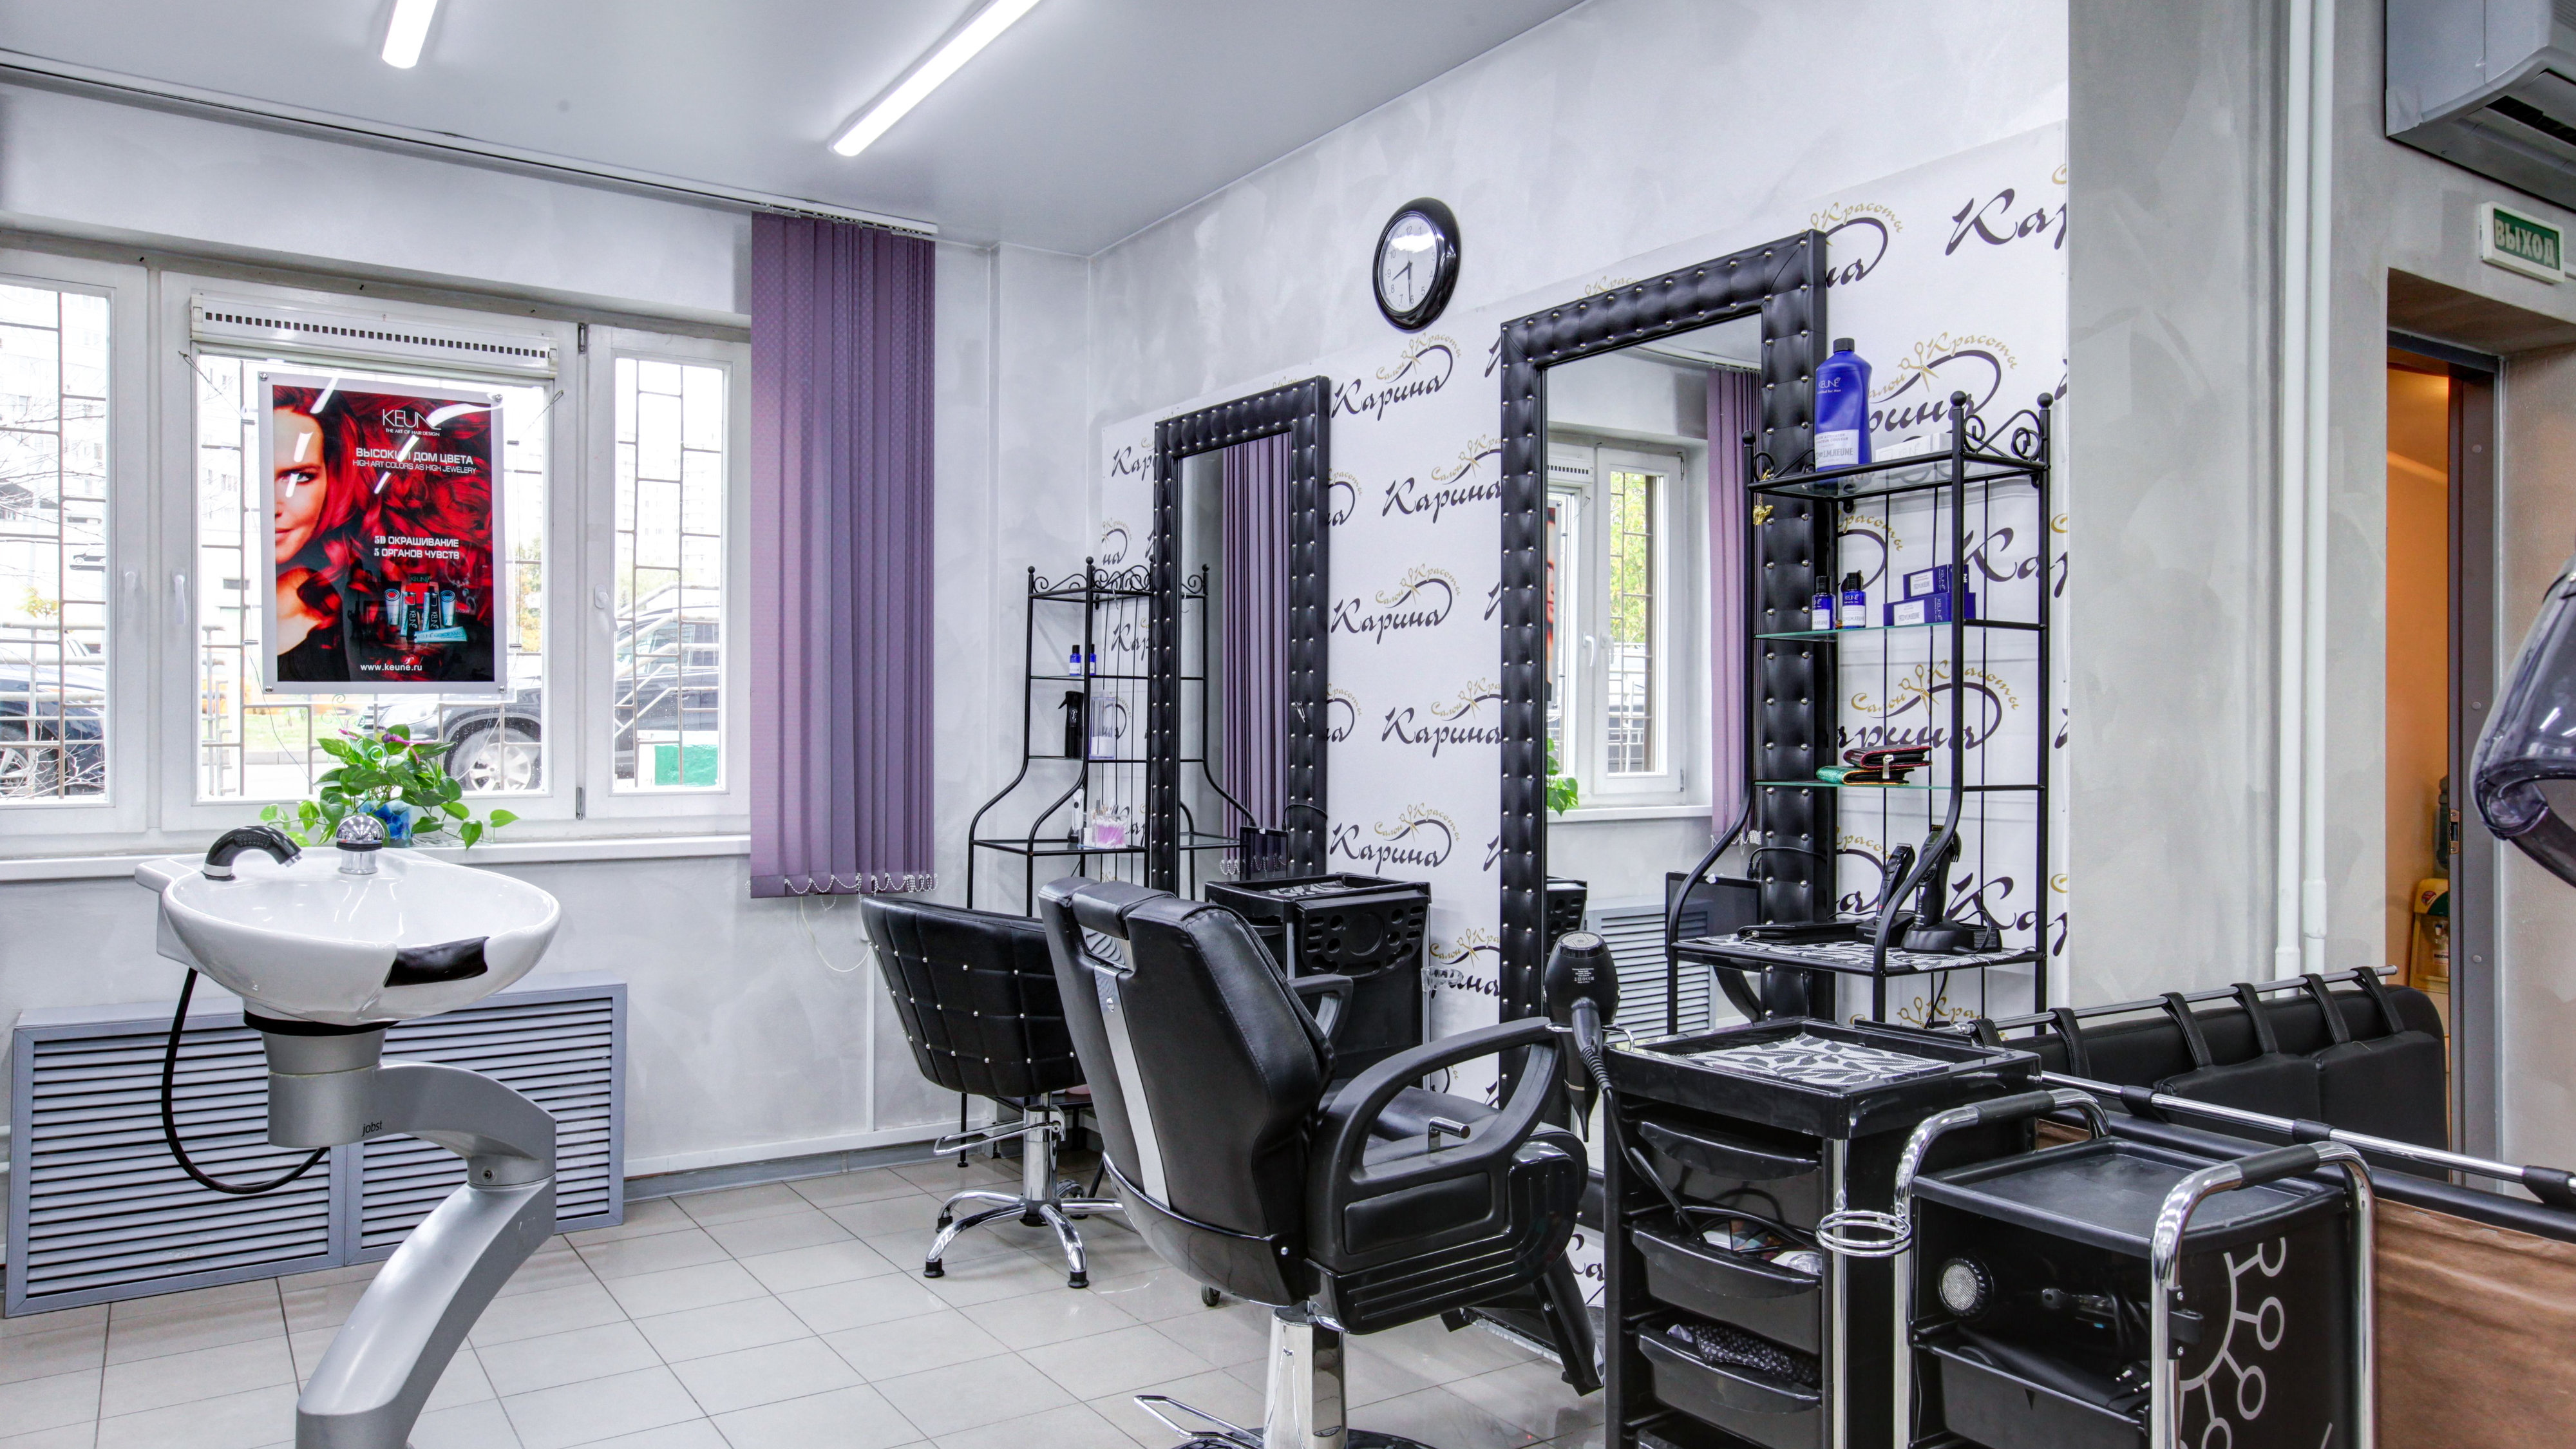 Ana karina's beauty salon